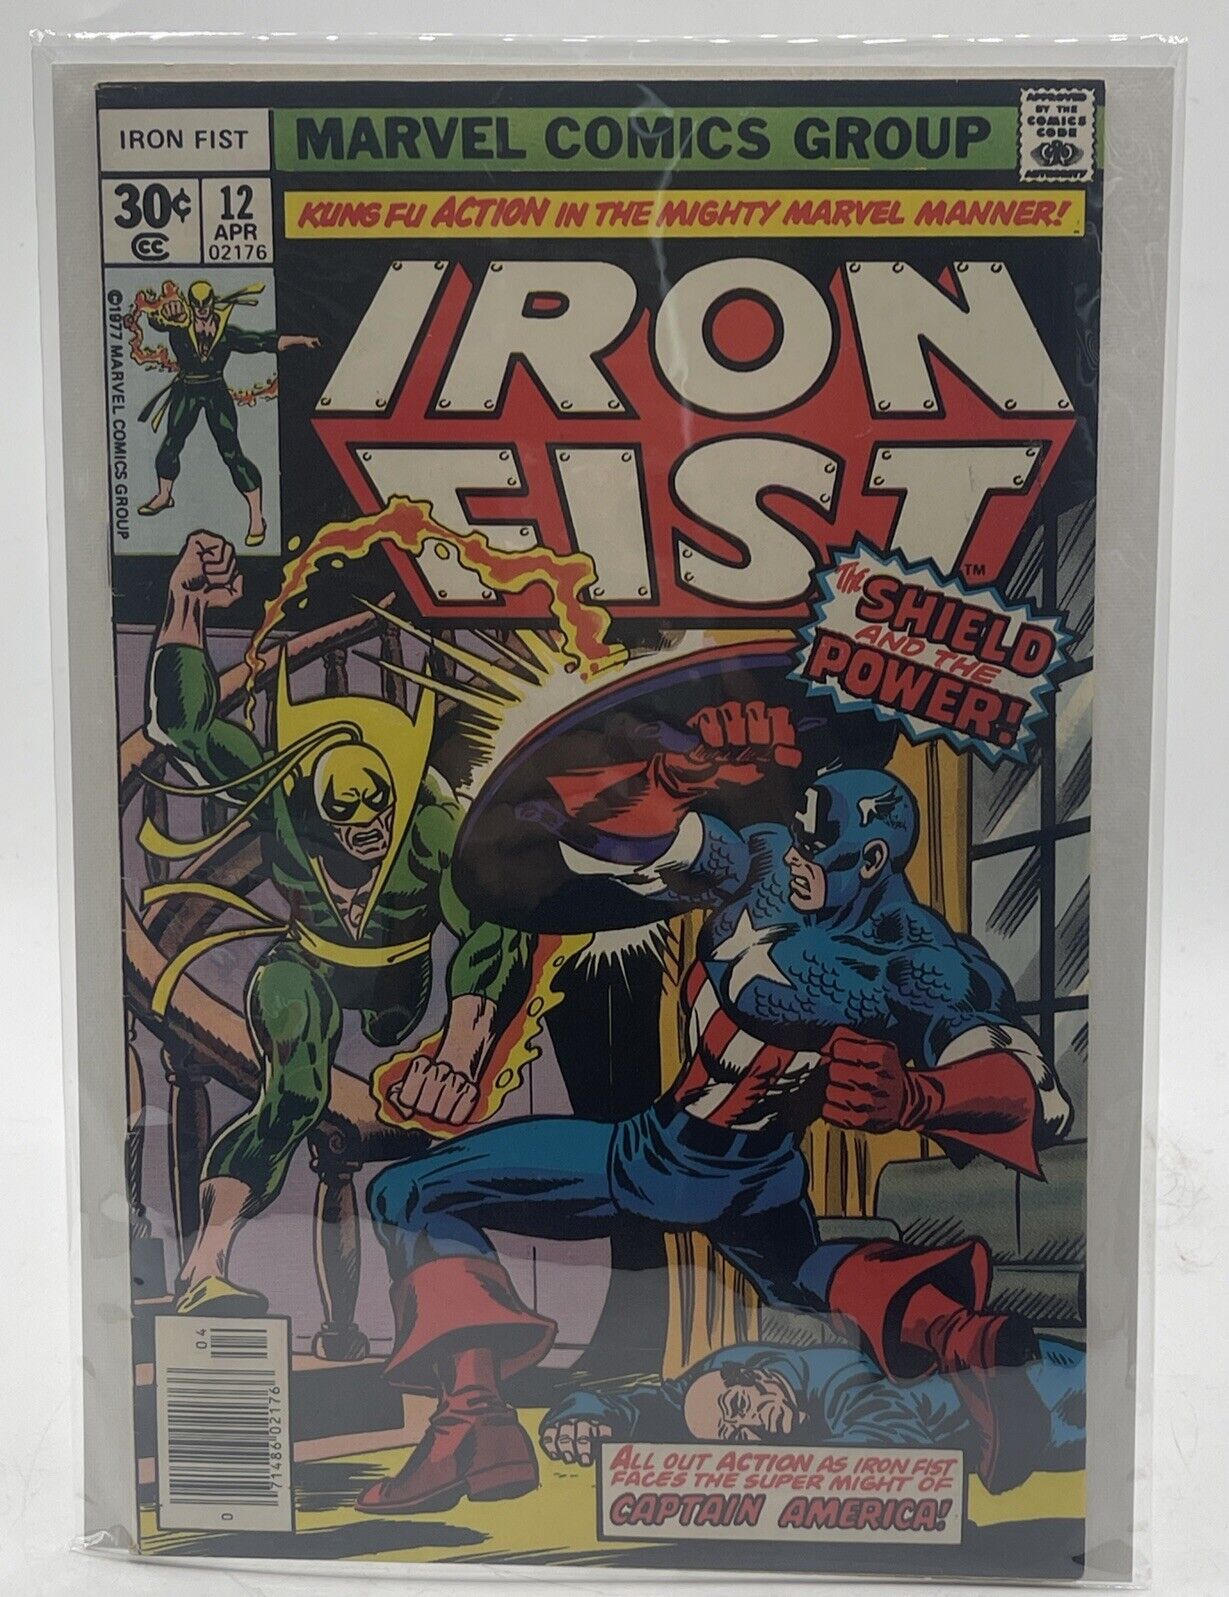 IRON FIST #12 April 1977 Vintage Marvel Comics Captain America Avengers